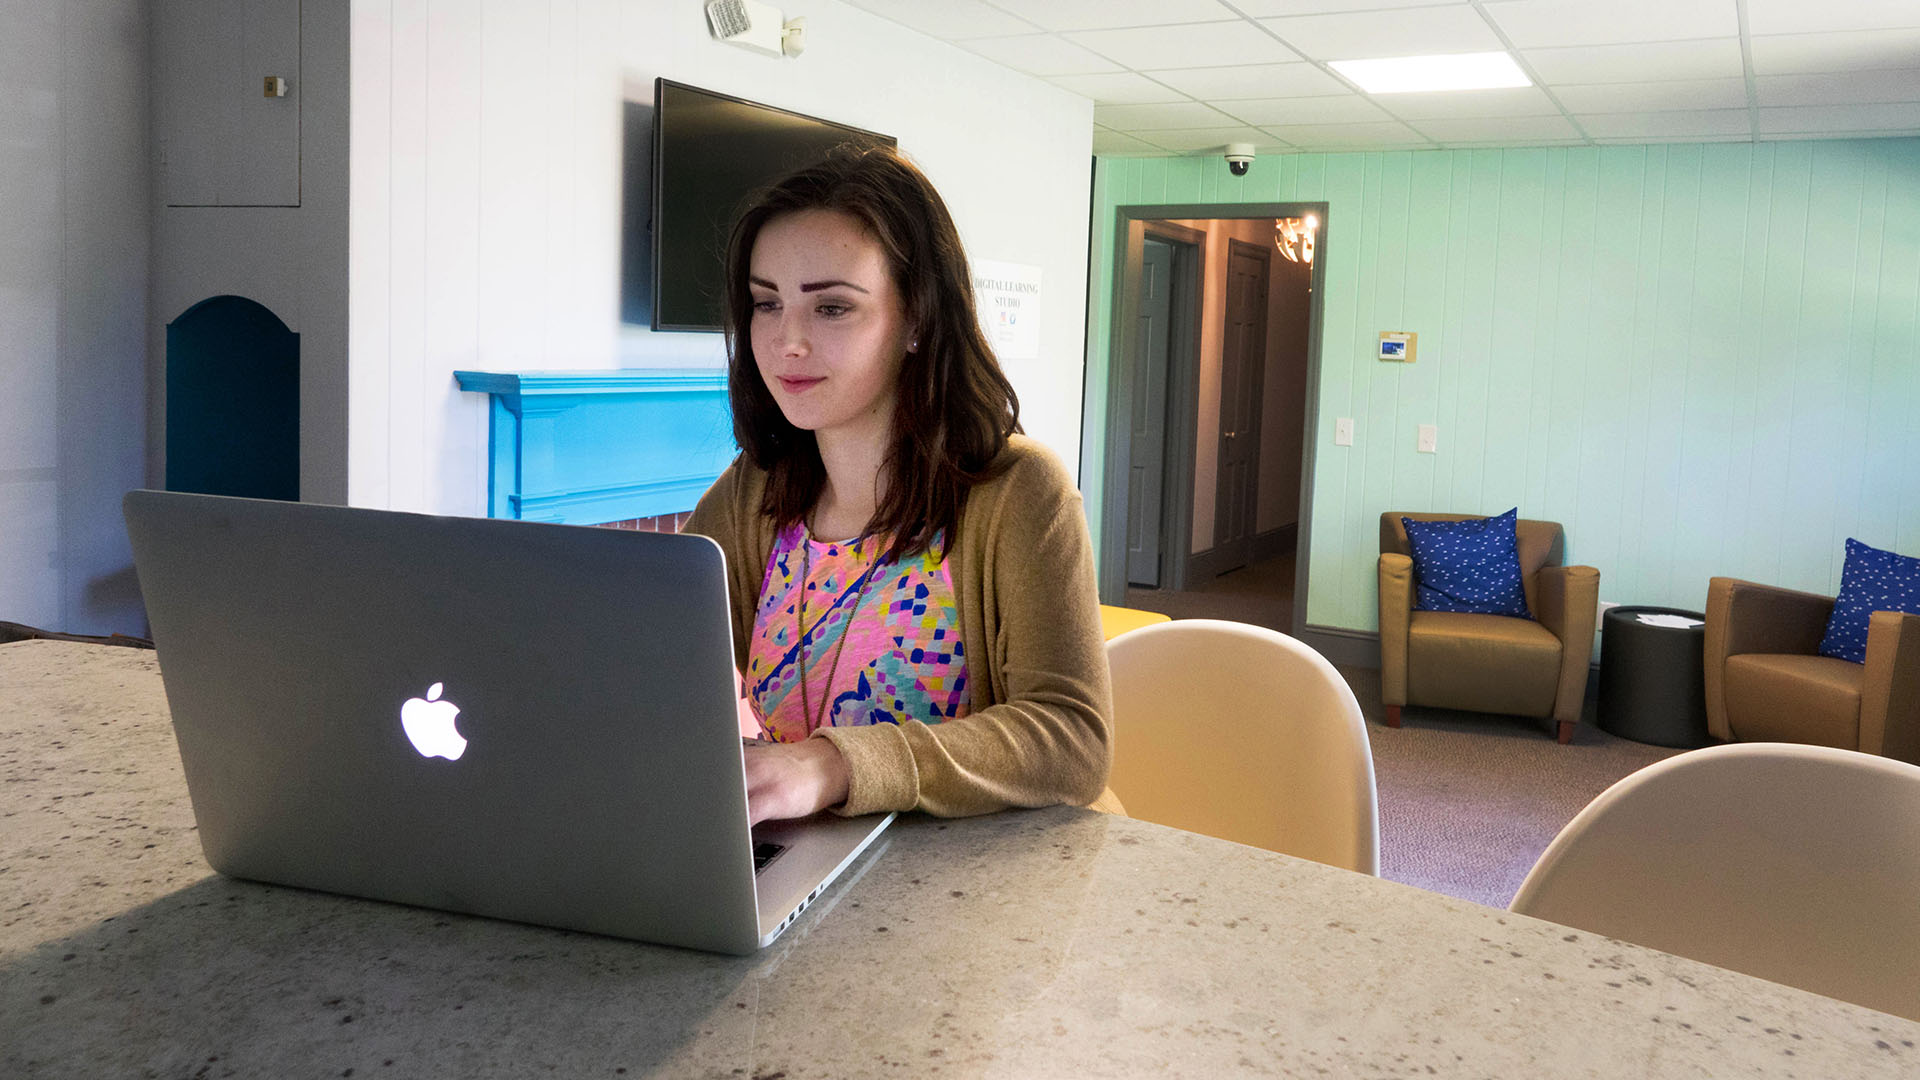 Student in digital lab using laptop